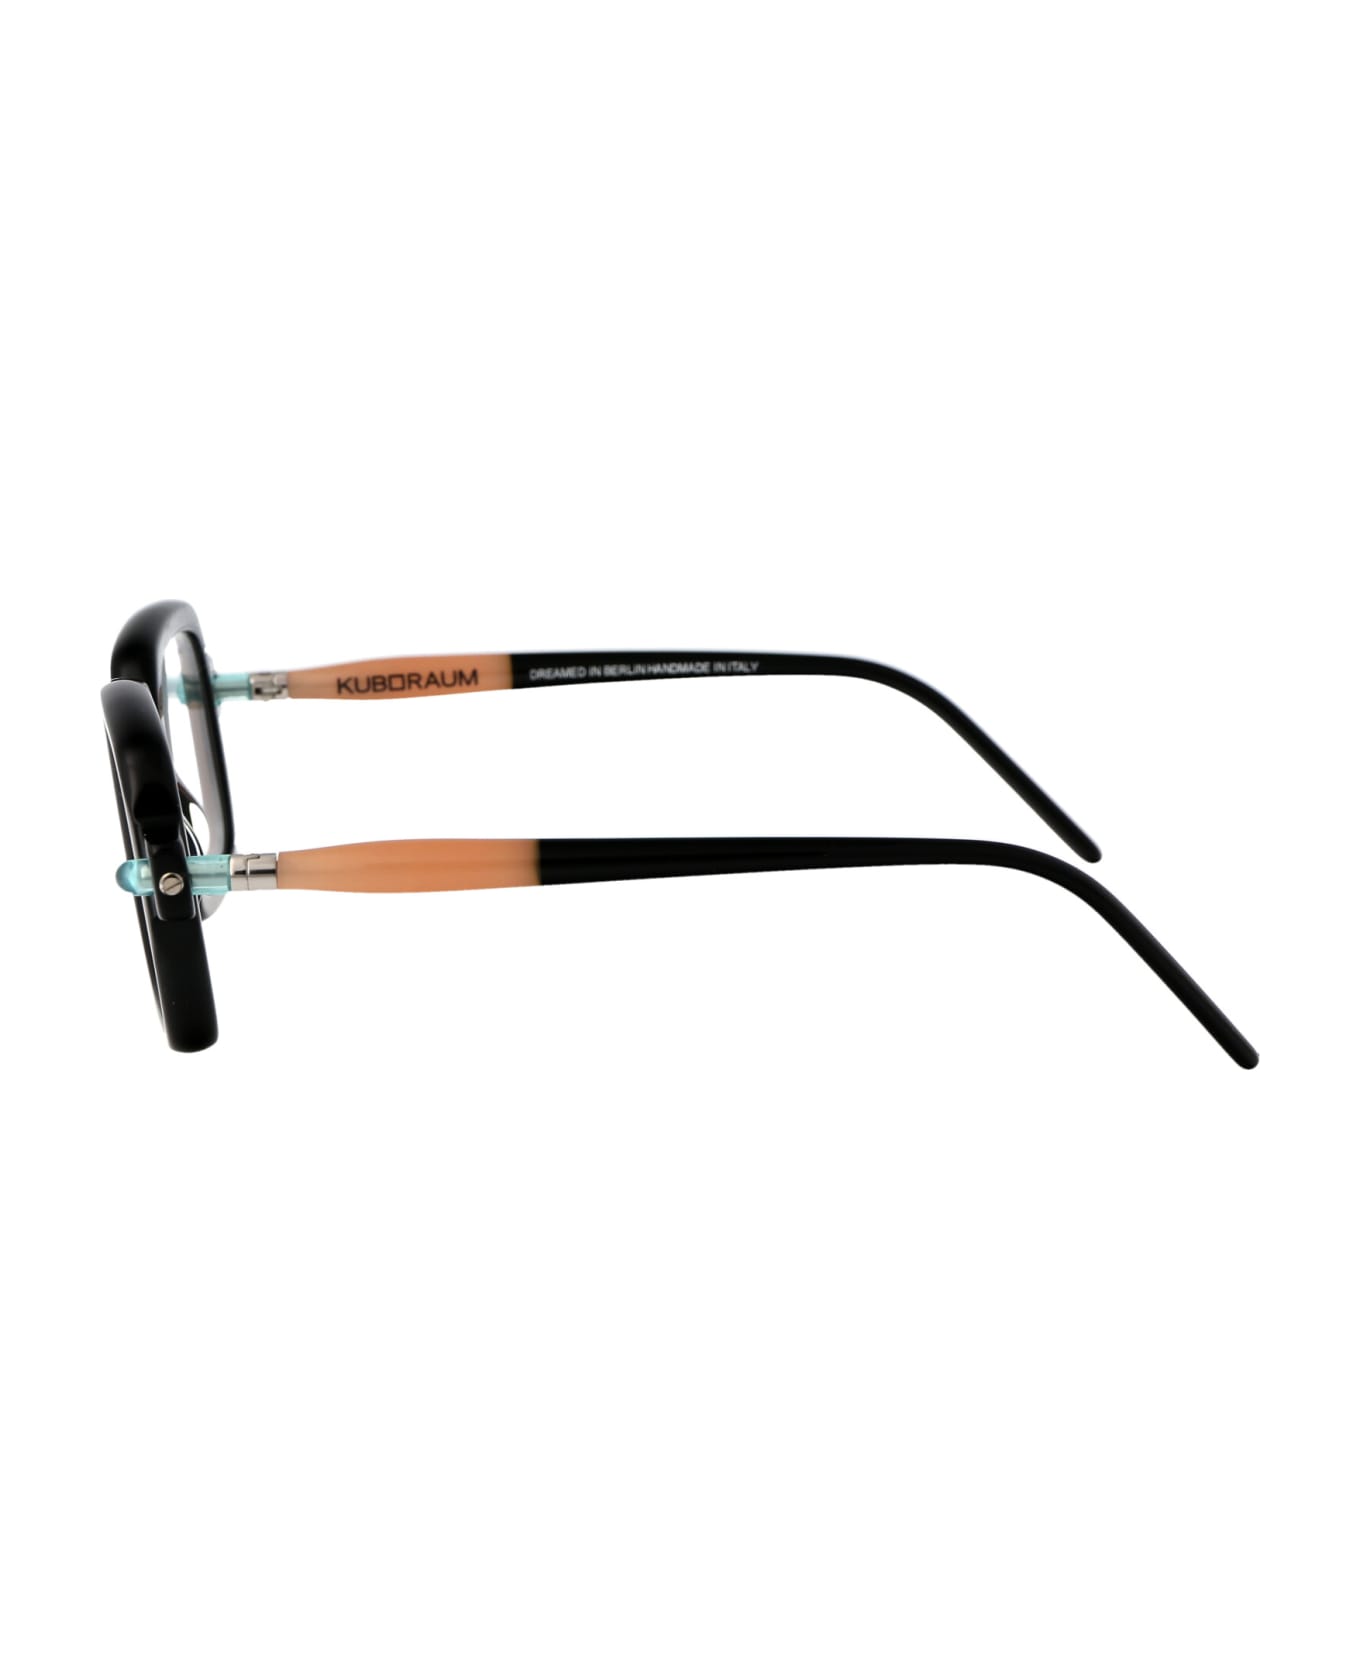 Kuboraum Maske P2 Glasses - BS AM